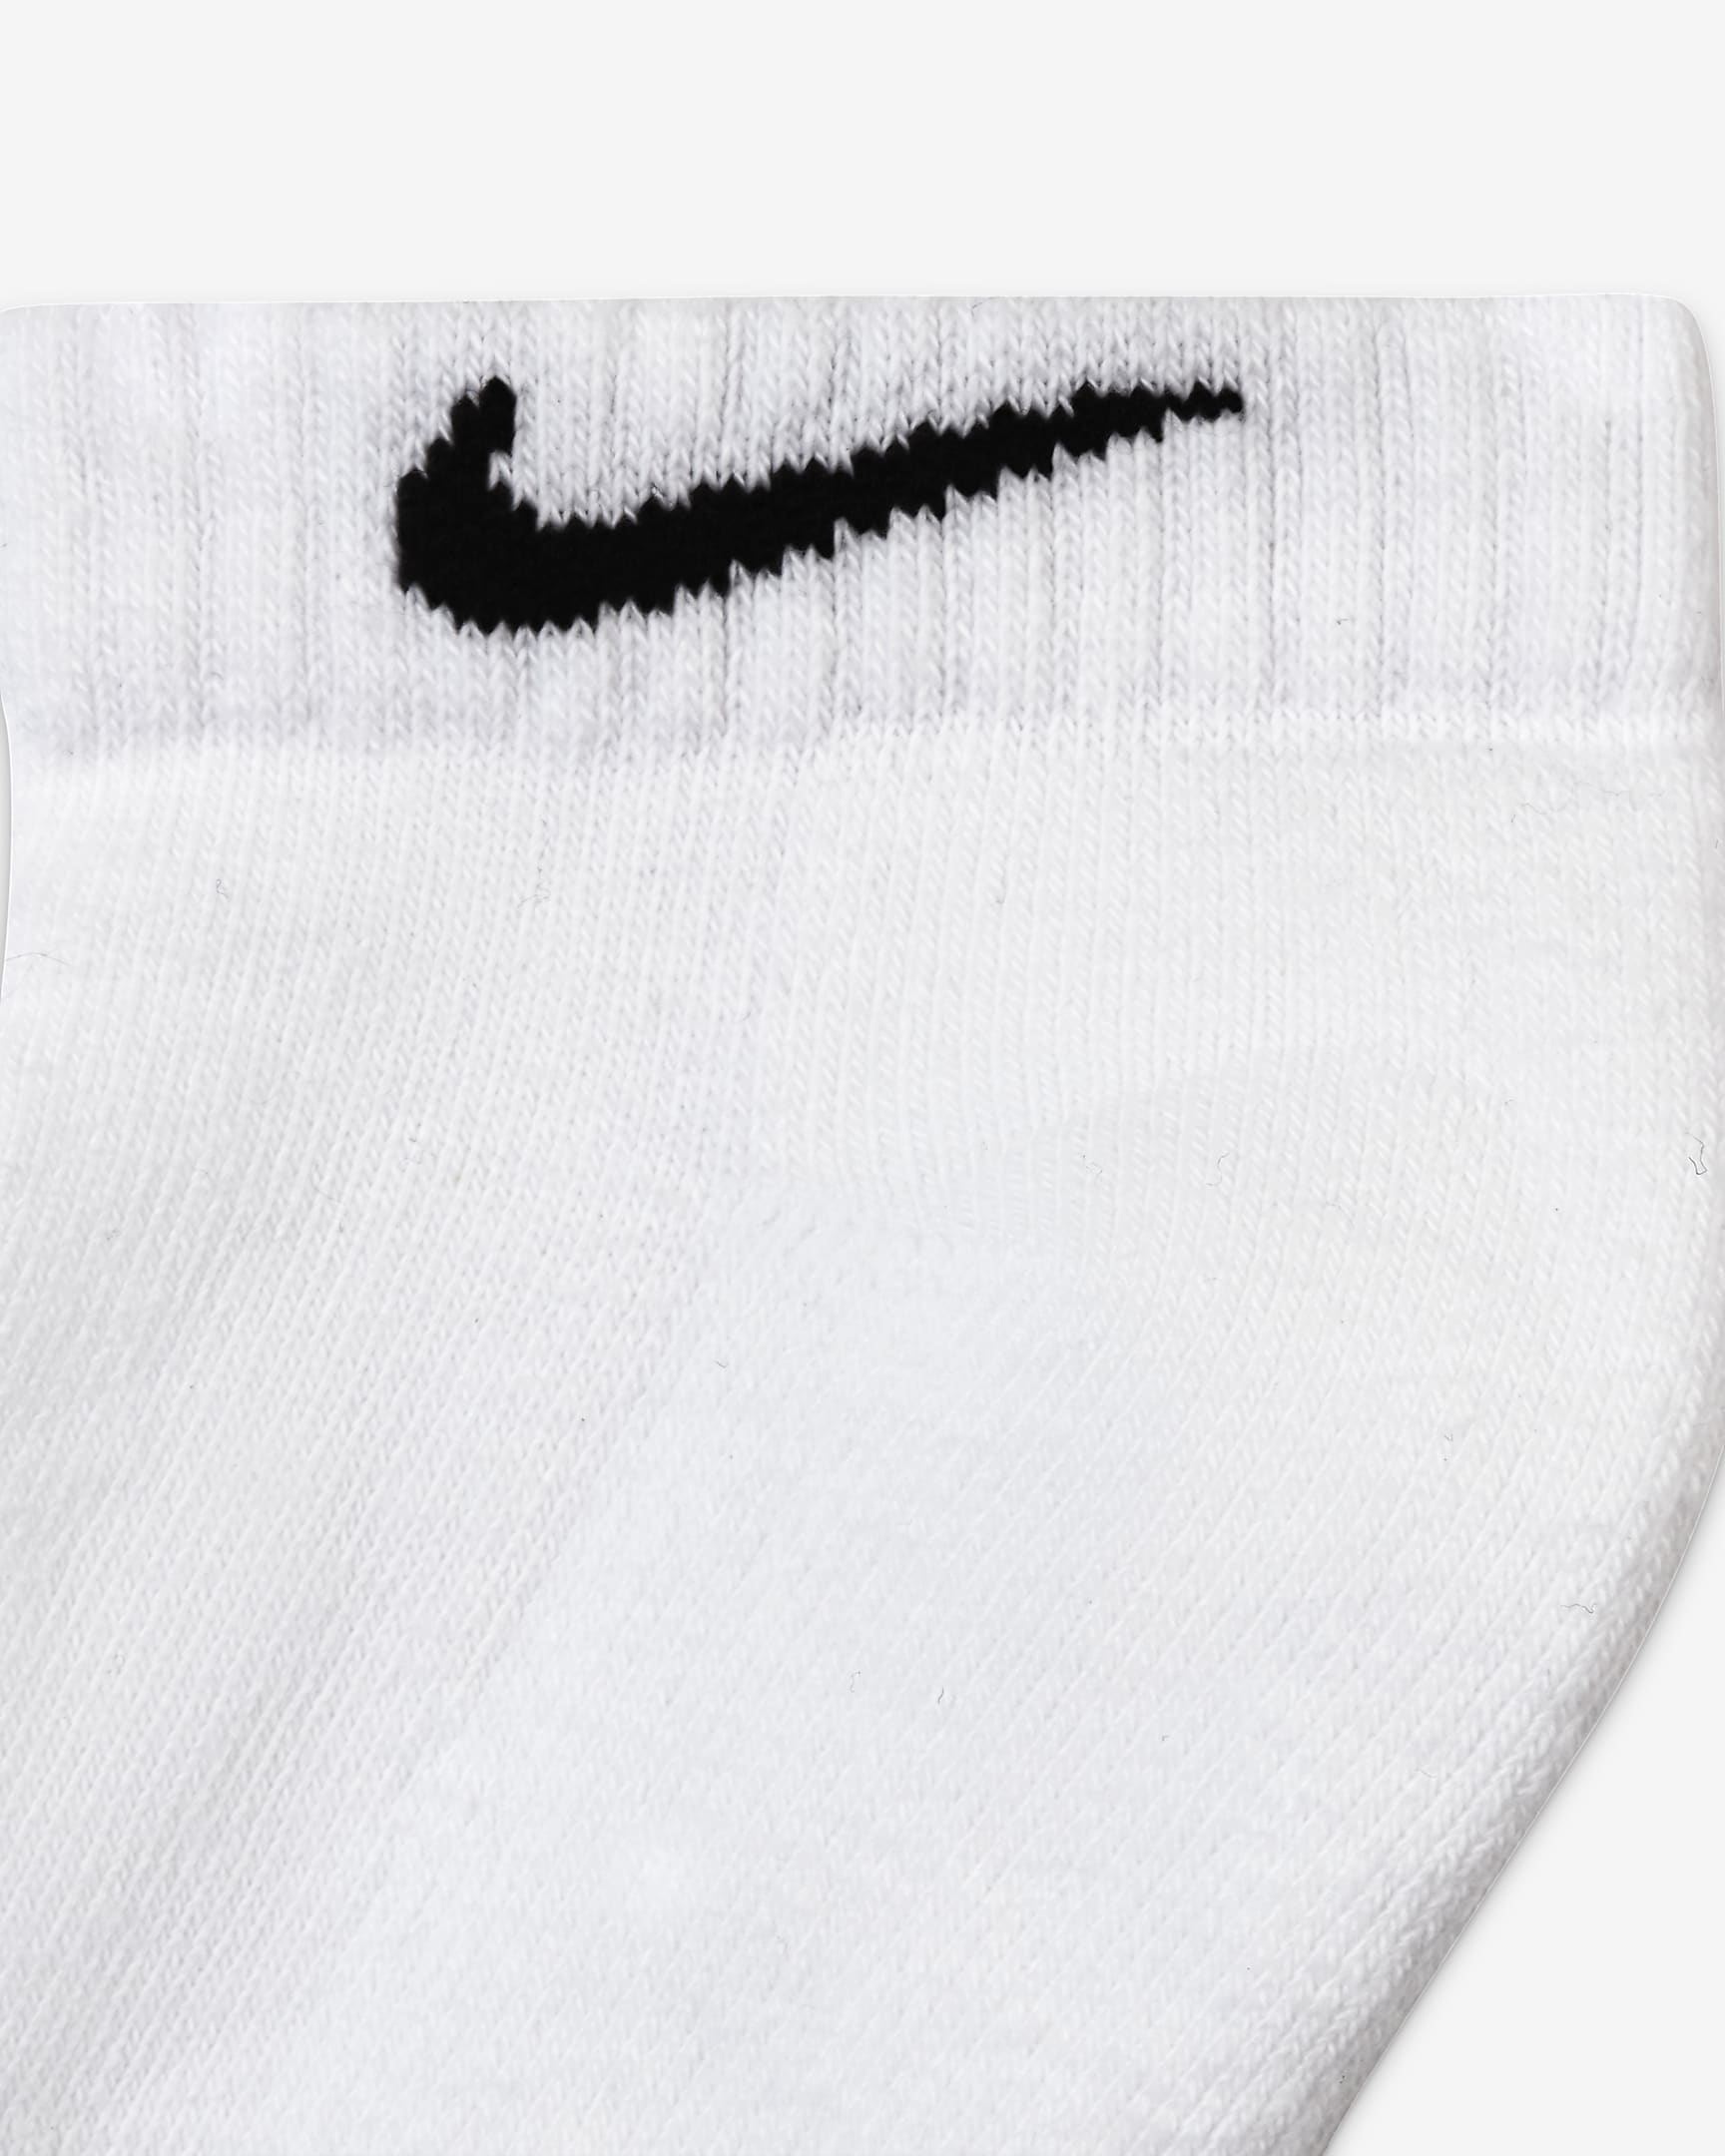 Nike Everyday Cushioned Training Low Socks (3 Pairs). Nike ID